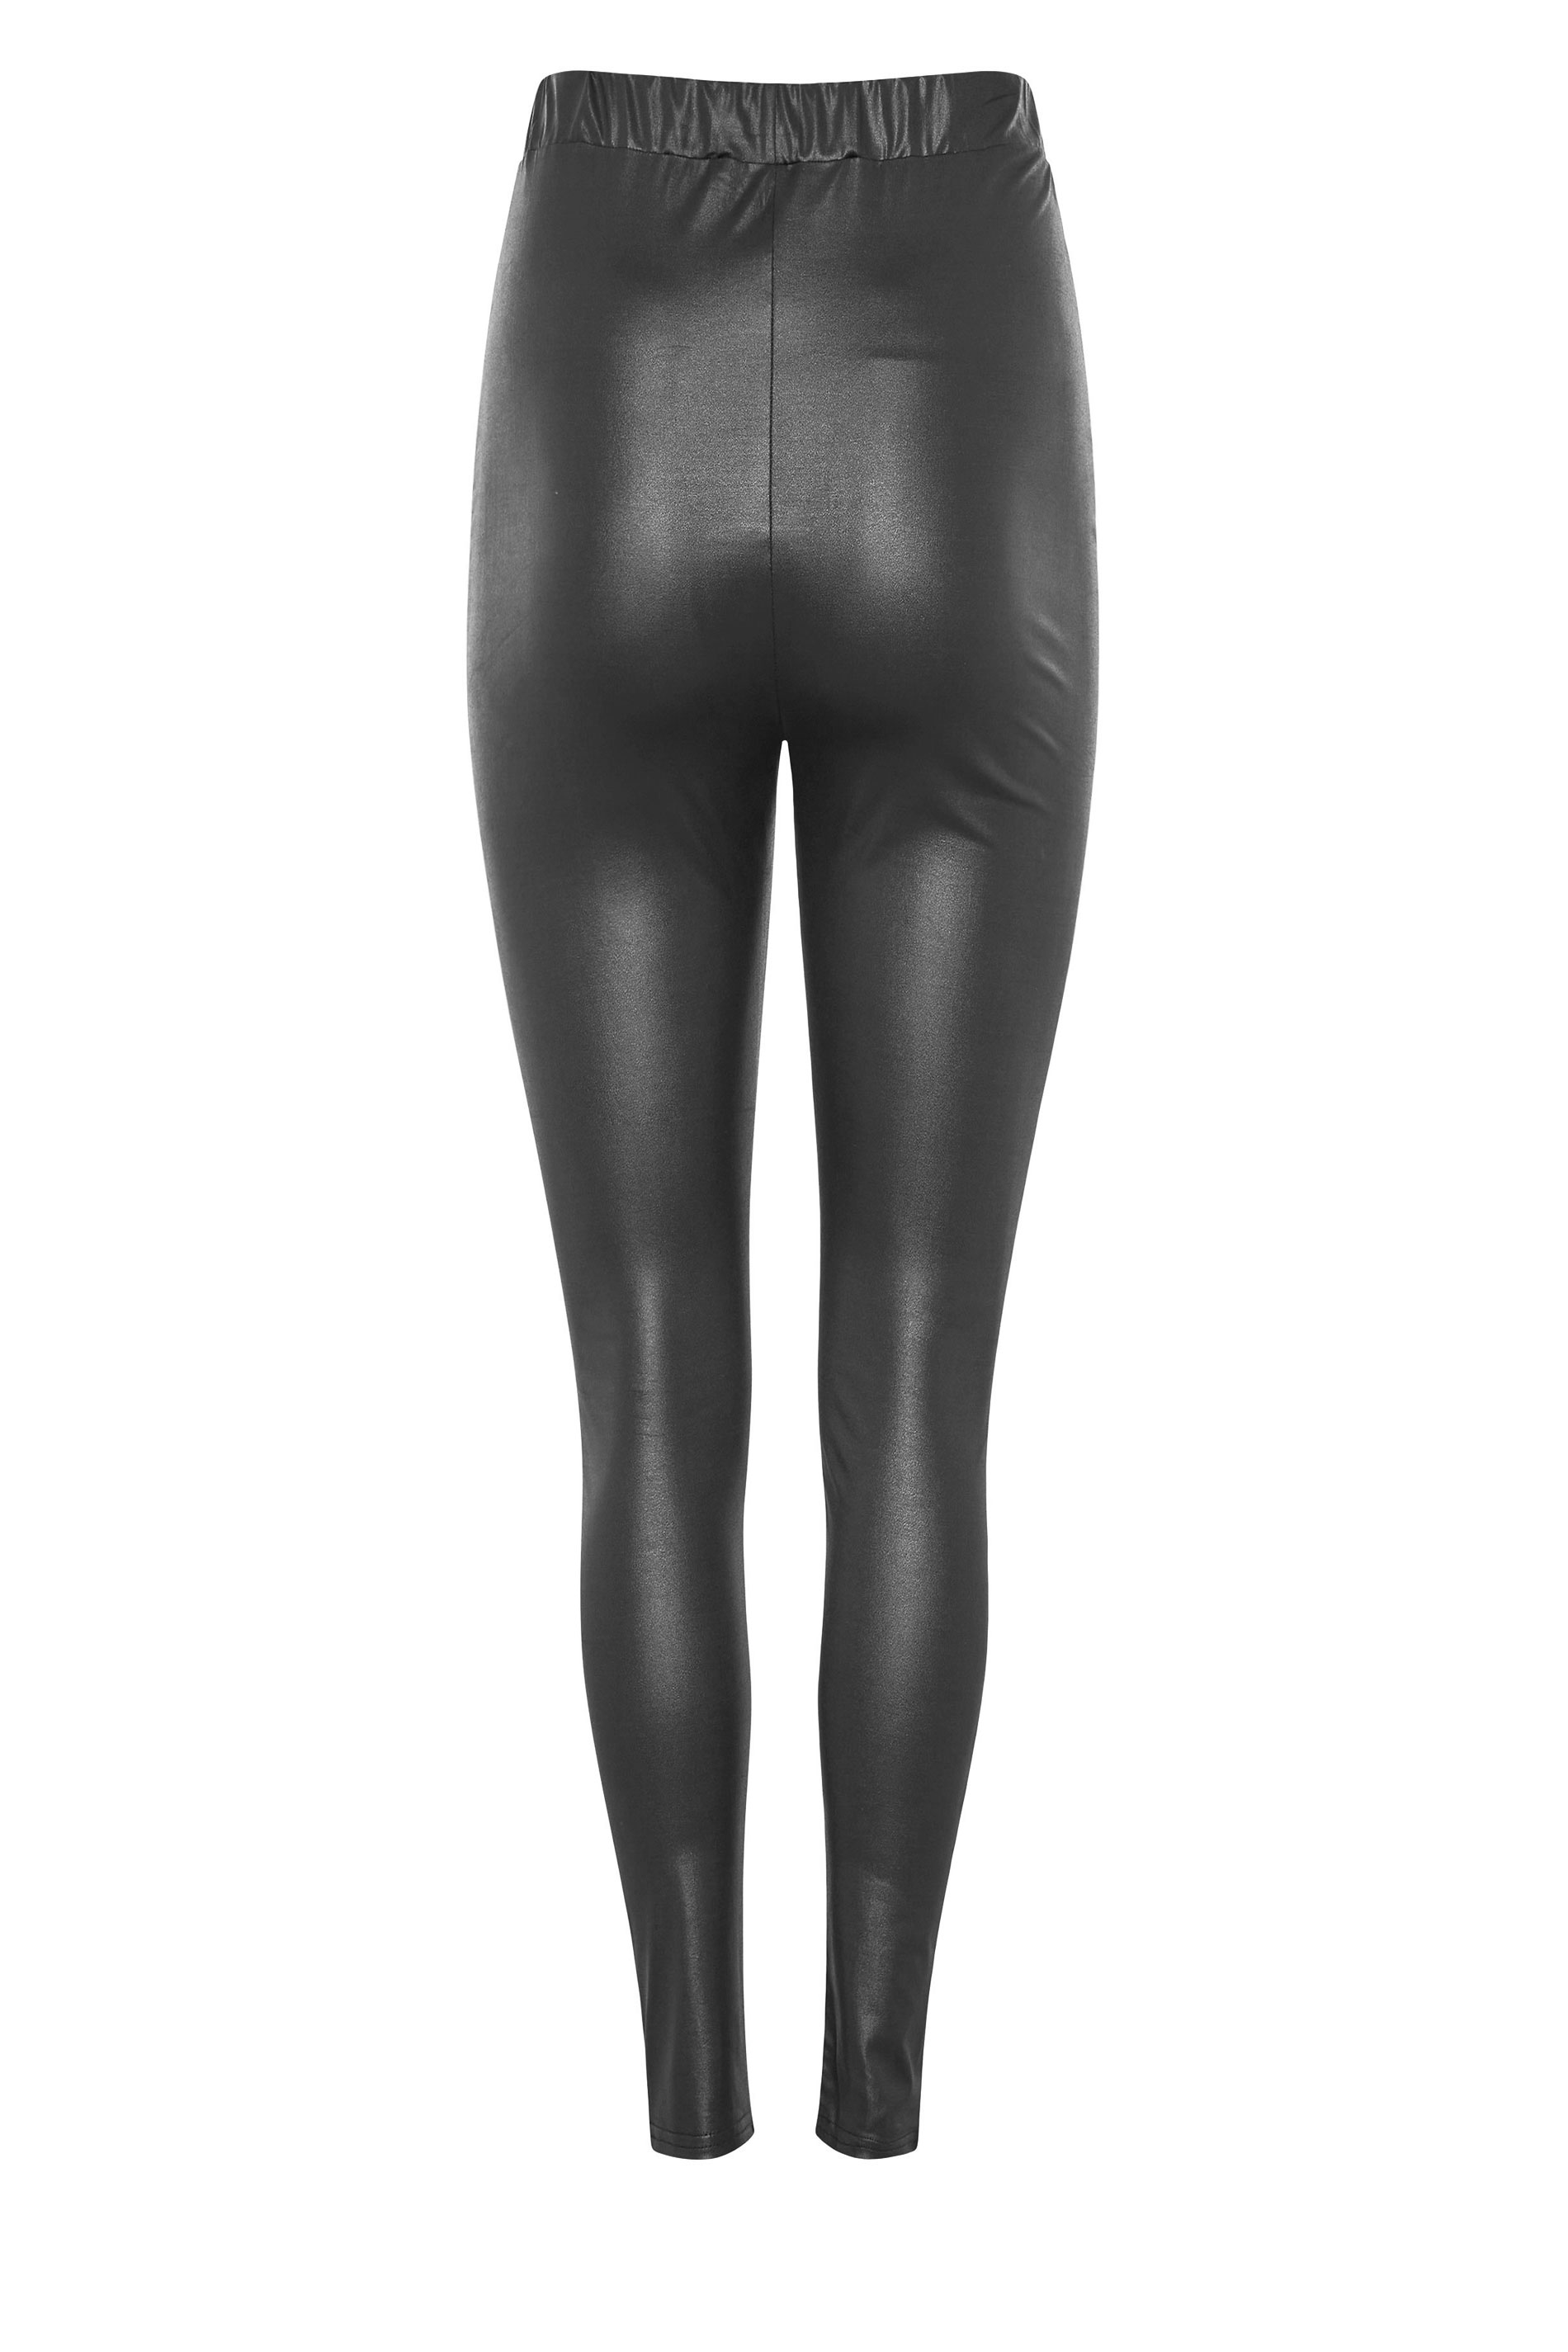 Tall Women's LTS Black Faux Leather Leggings | Long Tall Sally 3